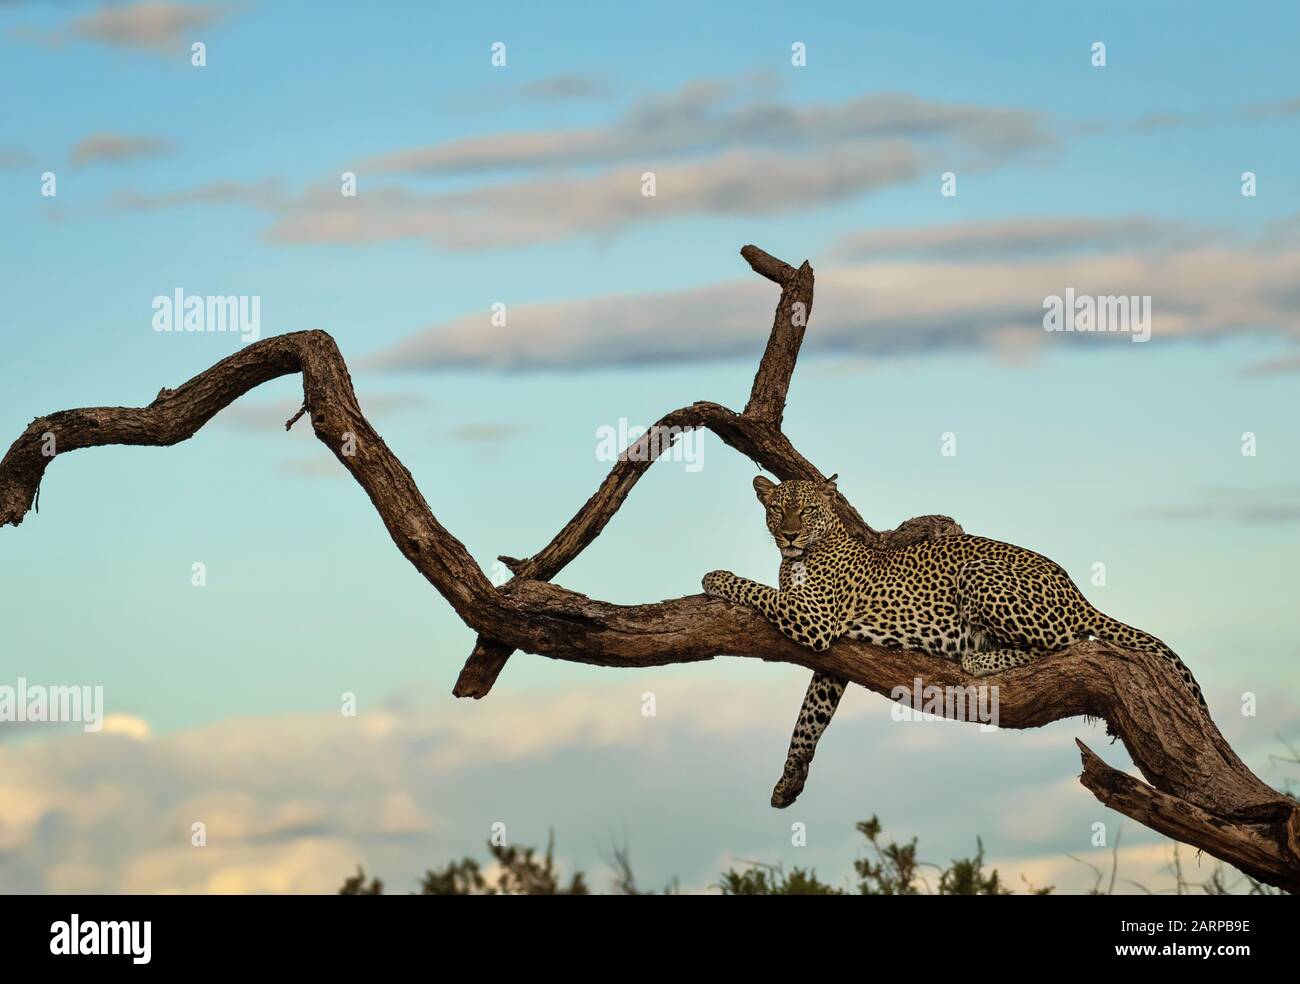 Leopardo en árbol, Reserva Nacional Samburu, Kenia Foto de stock